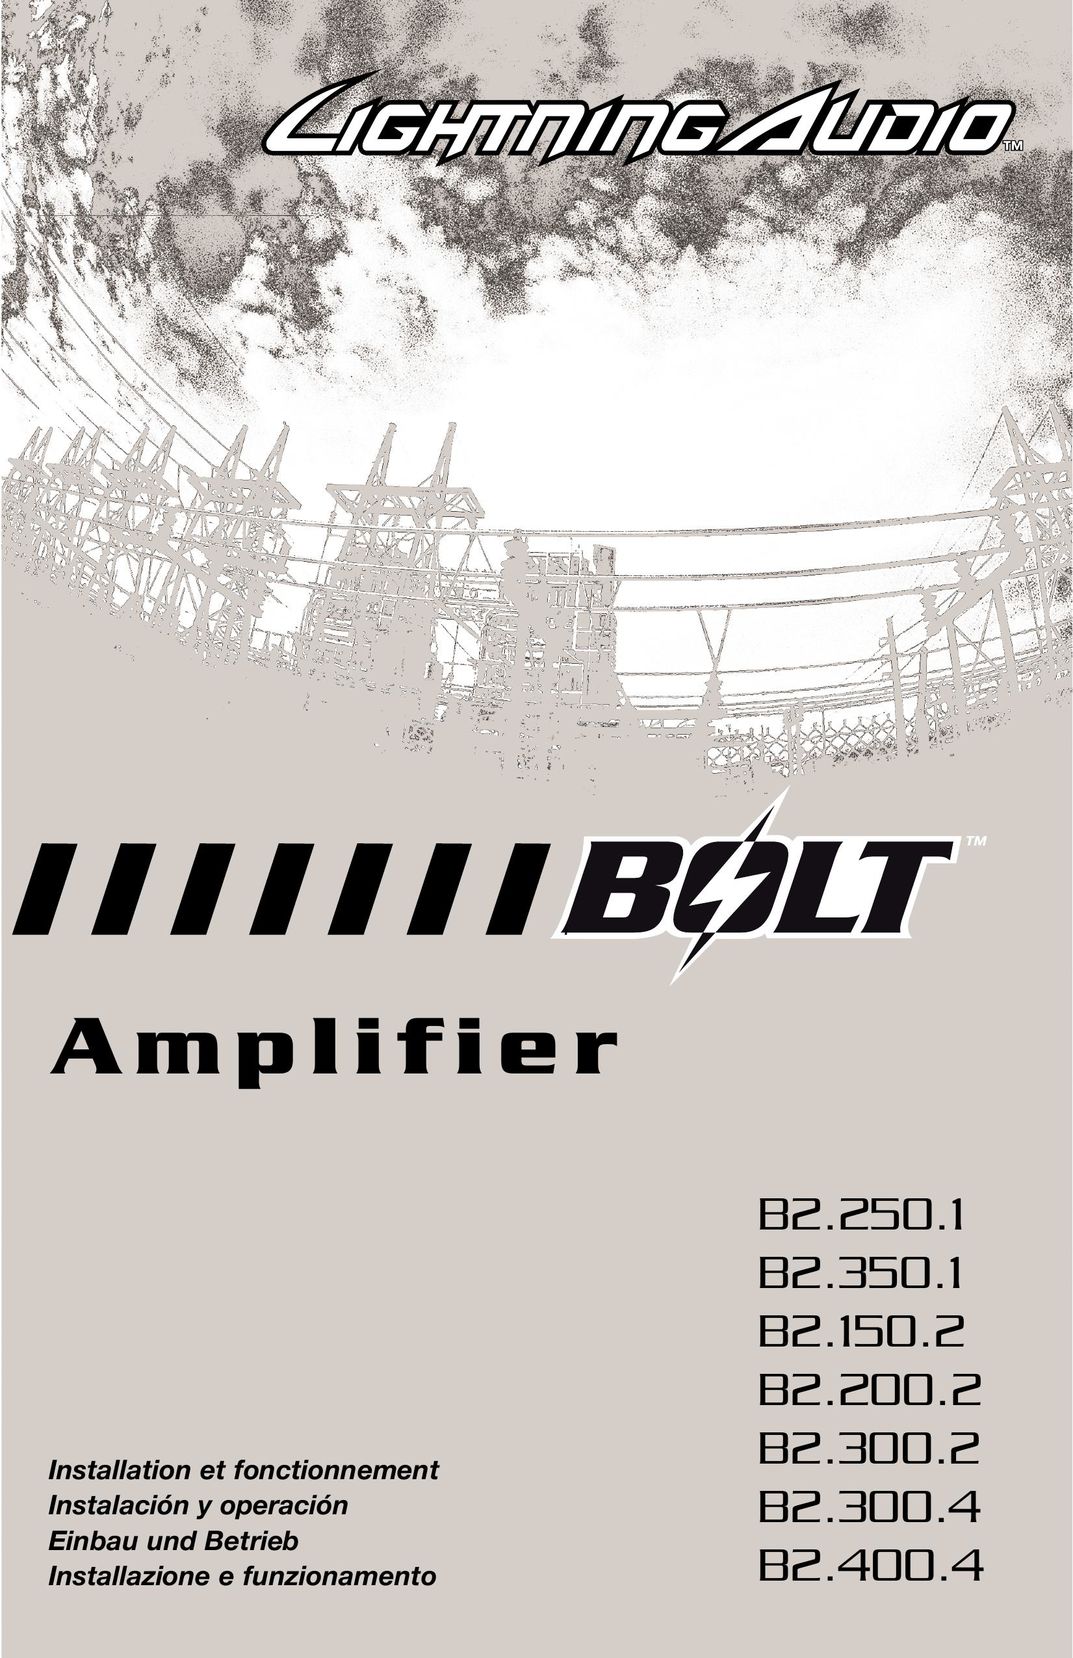 Lightning Audio B2.300.4 Car Amplifier User Manual